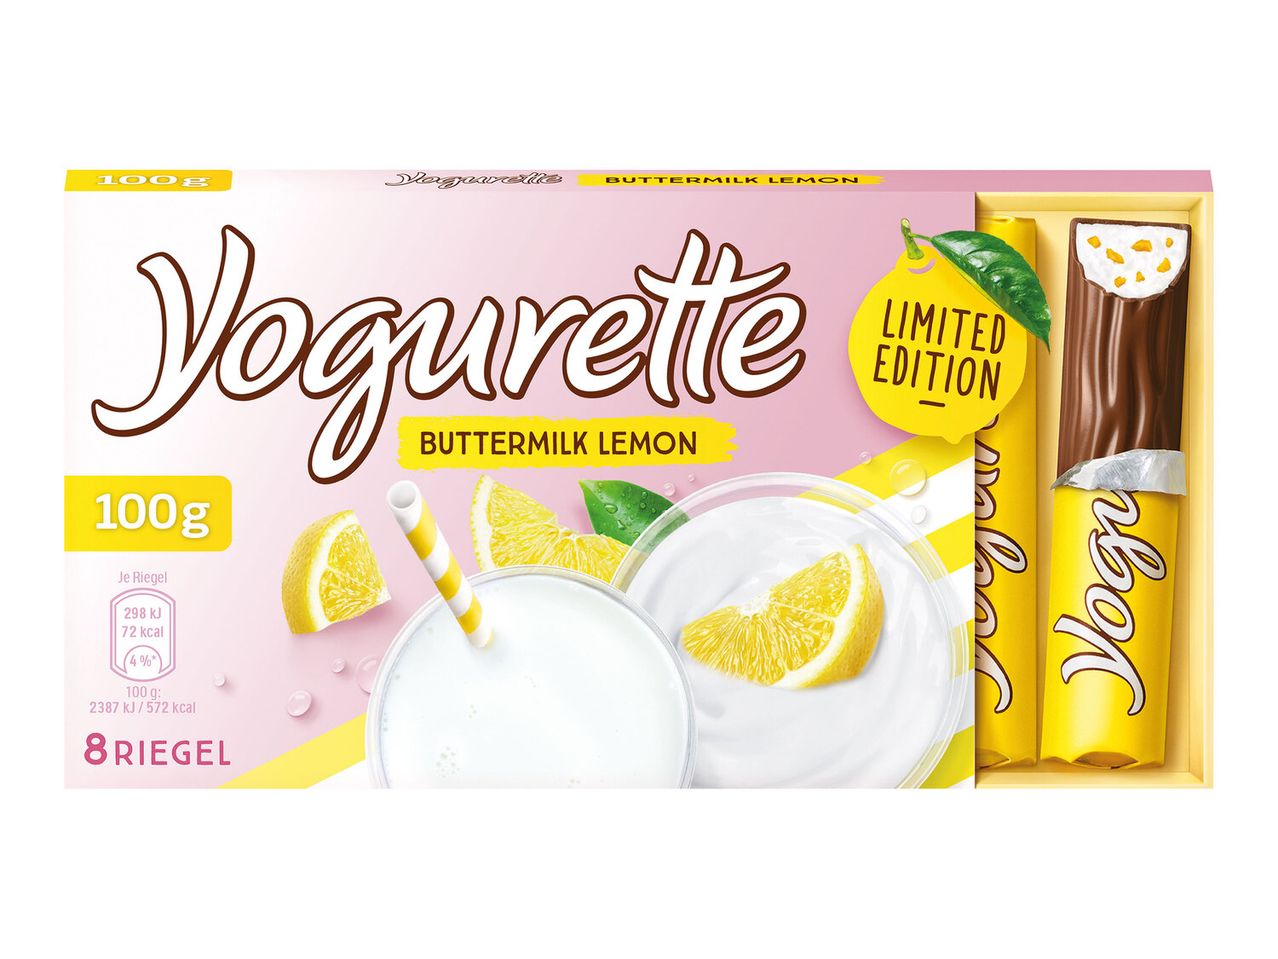 Yogurette Buttermilk Lemon | 